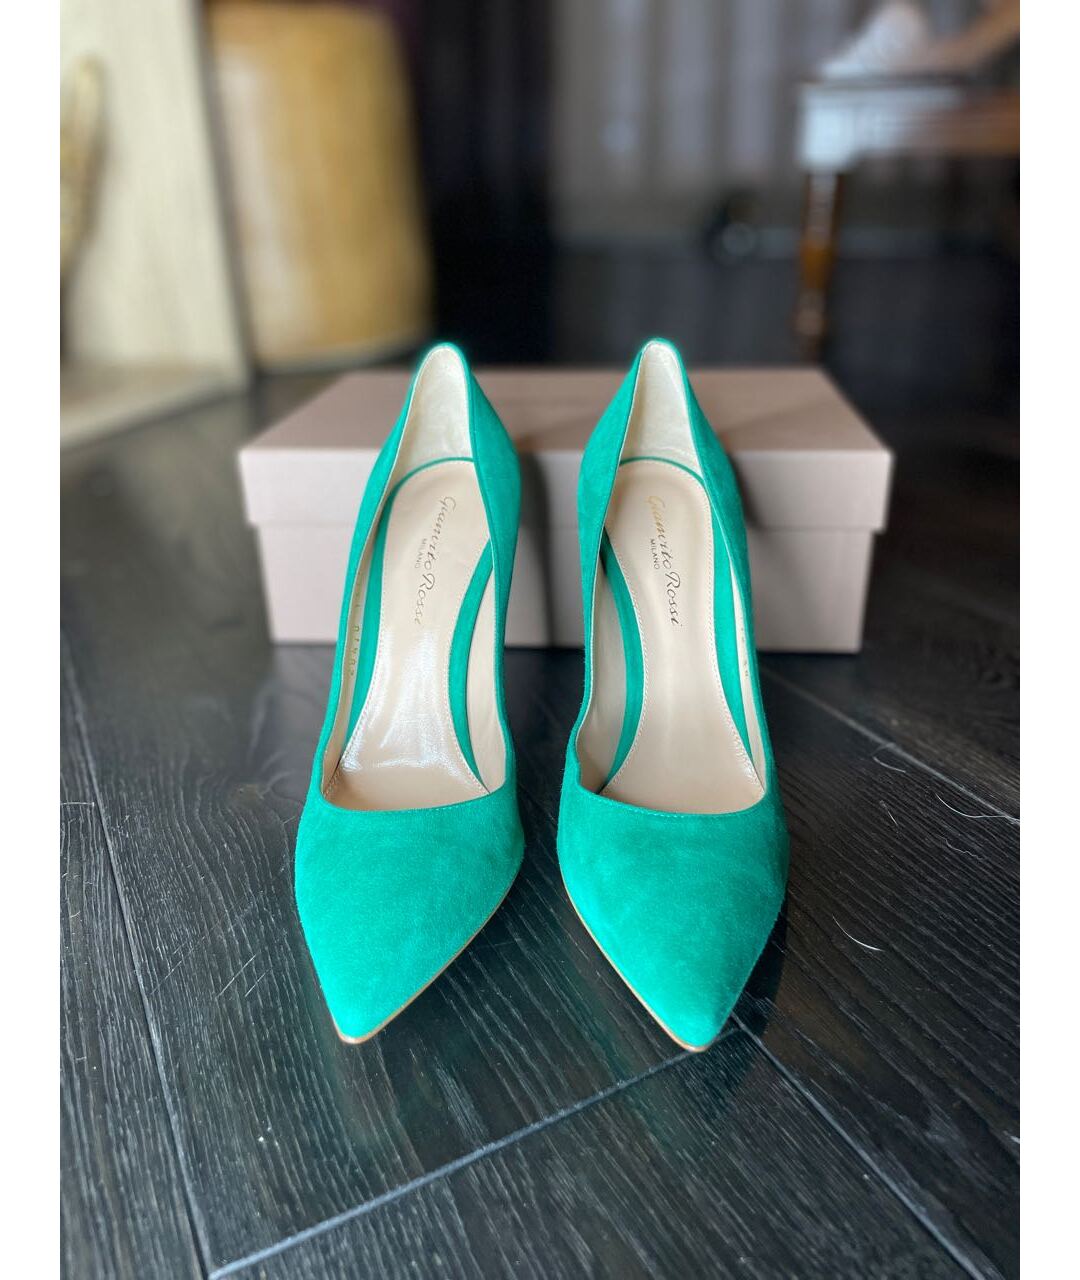 GIANVITO ROSSI Зеленые замшевые туфли, фото 2